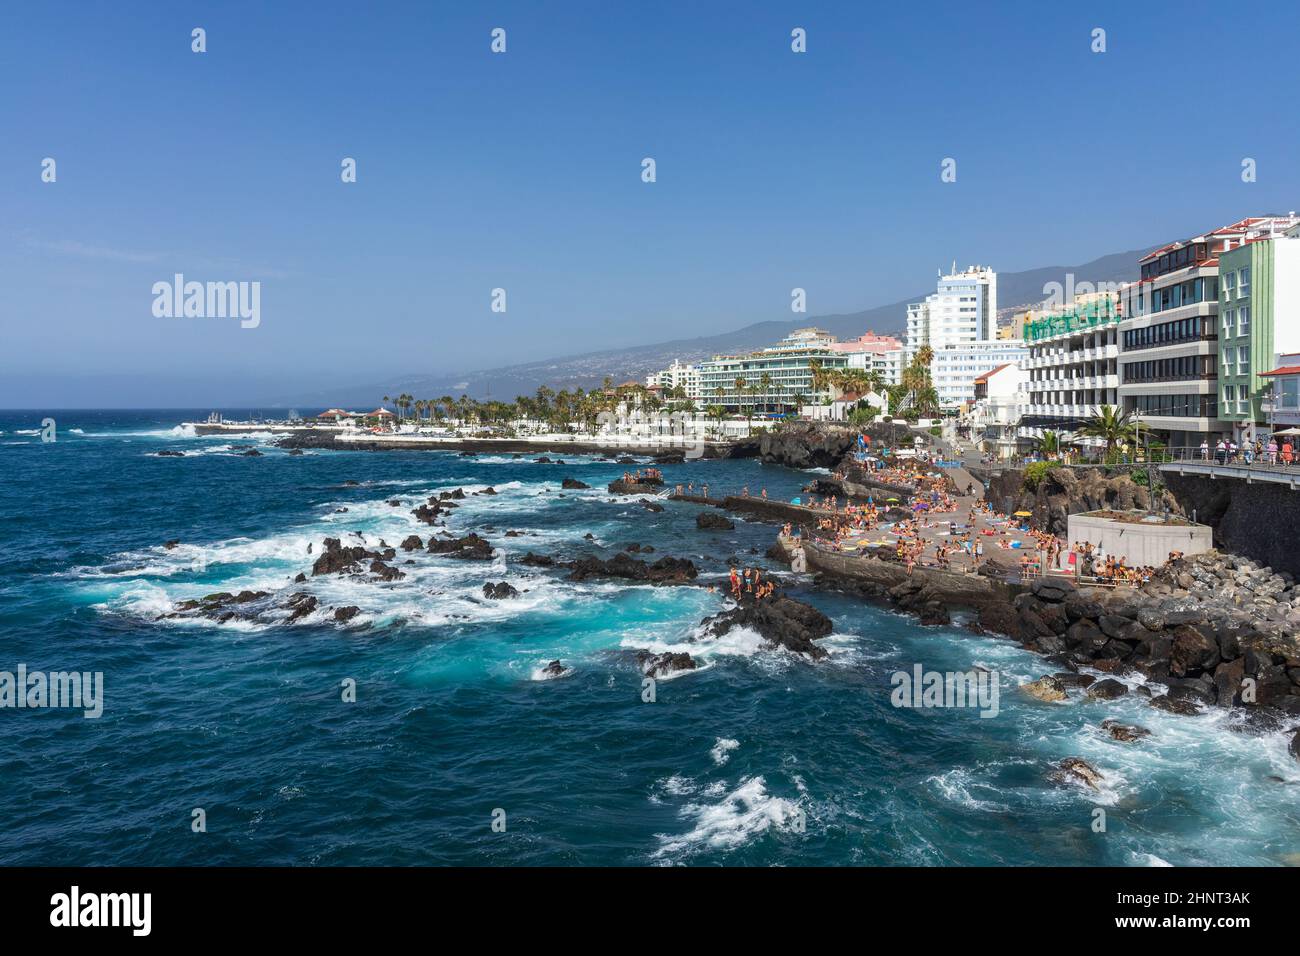 PUERTO DE LA CRUZ, TENERIFE, SPAIN - JULY 14, 2021: City promenade and beach with vacationers. Stock Photo